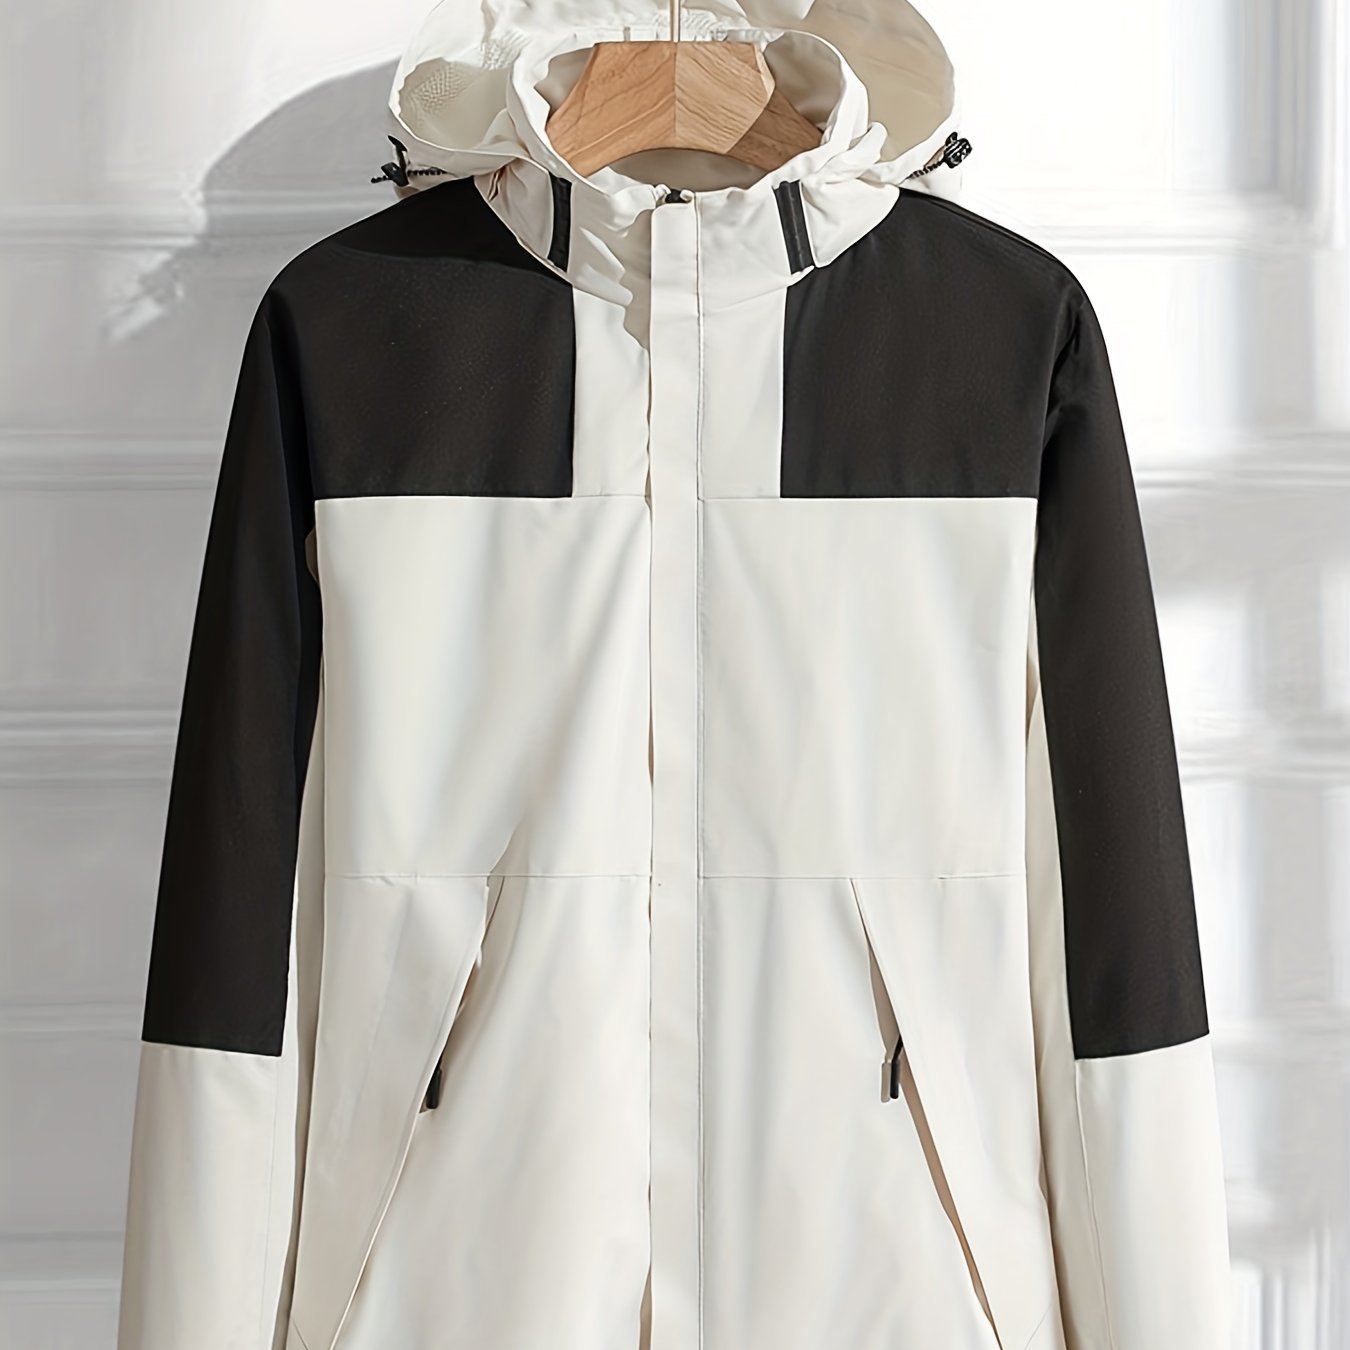 Men's Hooded Casual Lightweight Waterproof Windbreaker Jacket Coat Regular Fit Coat